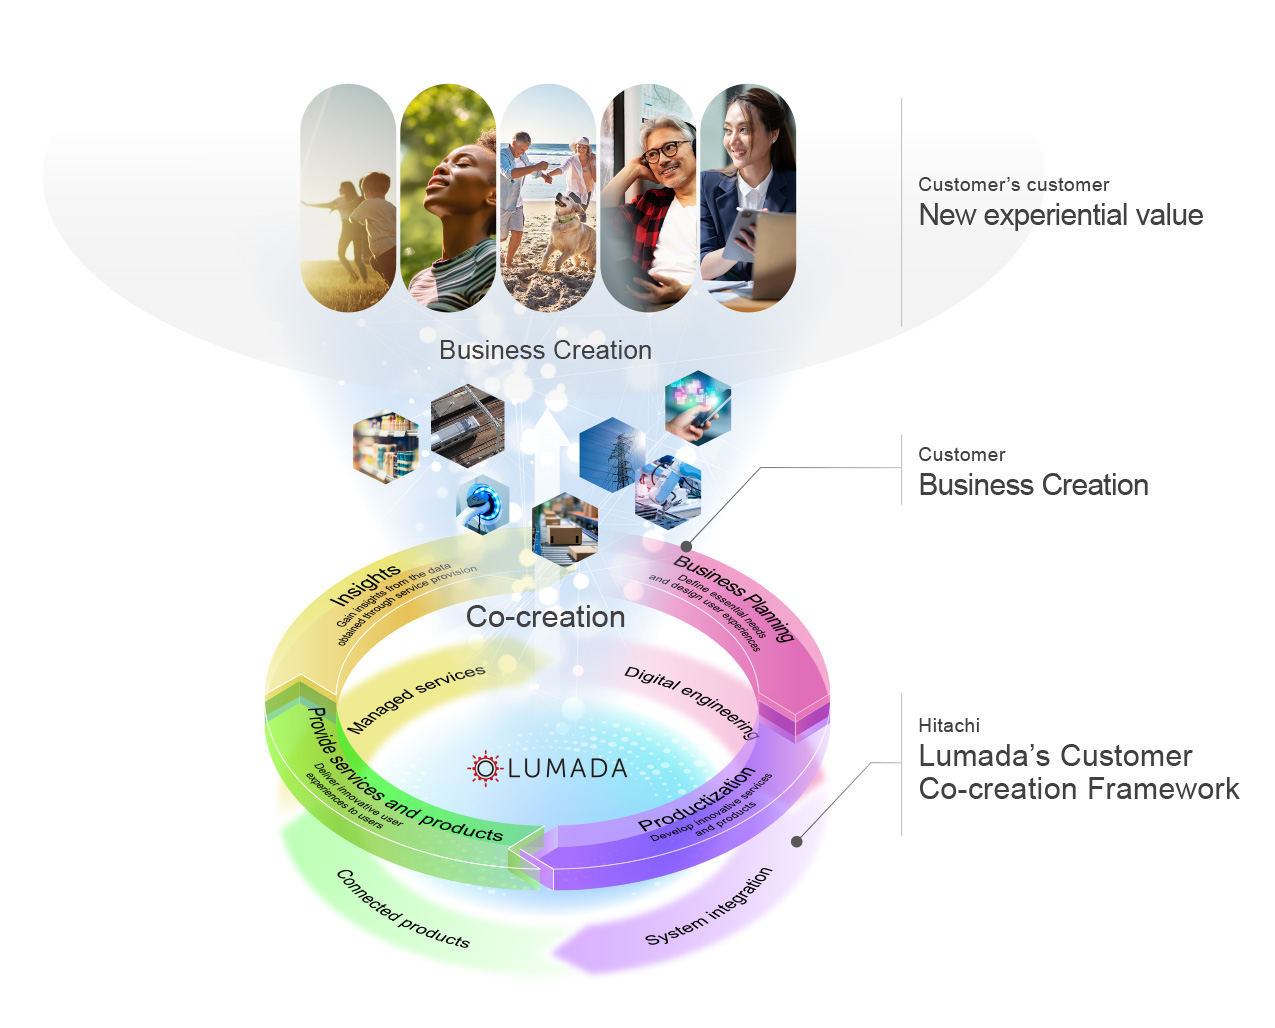 Lumada’s Customer Co-creation Framework